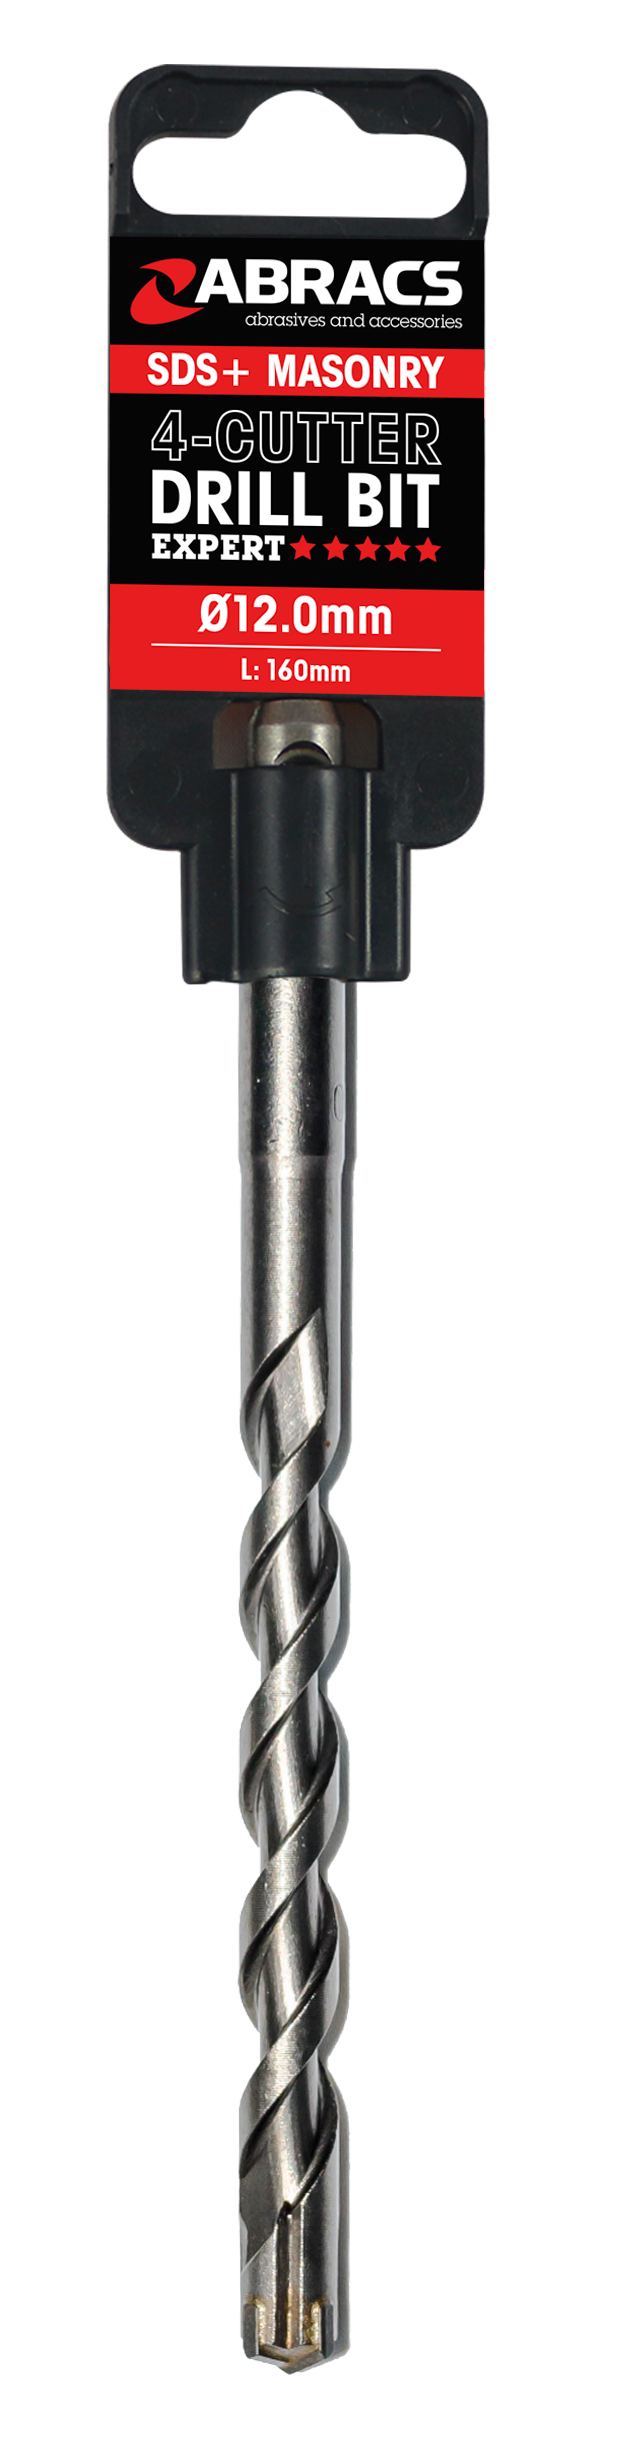 DBCX080160 8.0mm x 160mm SDS+ Masonry Drill Bit - 4 Cutter